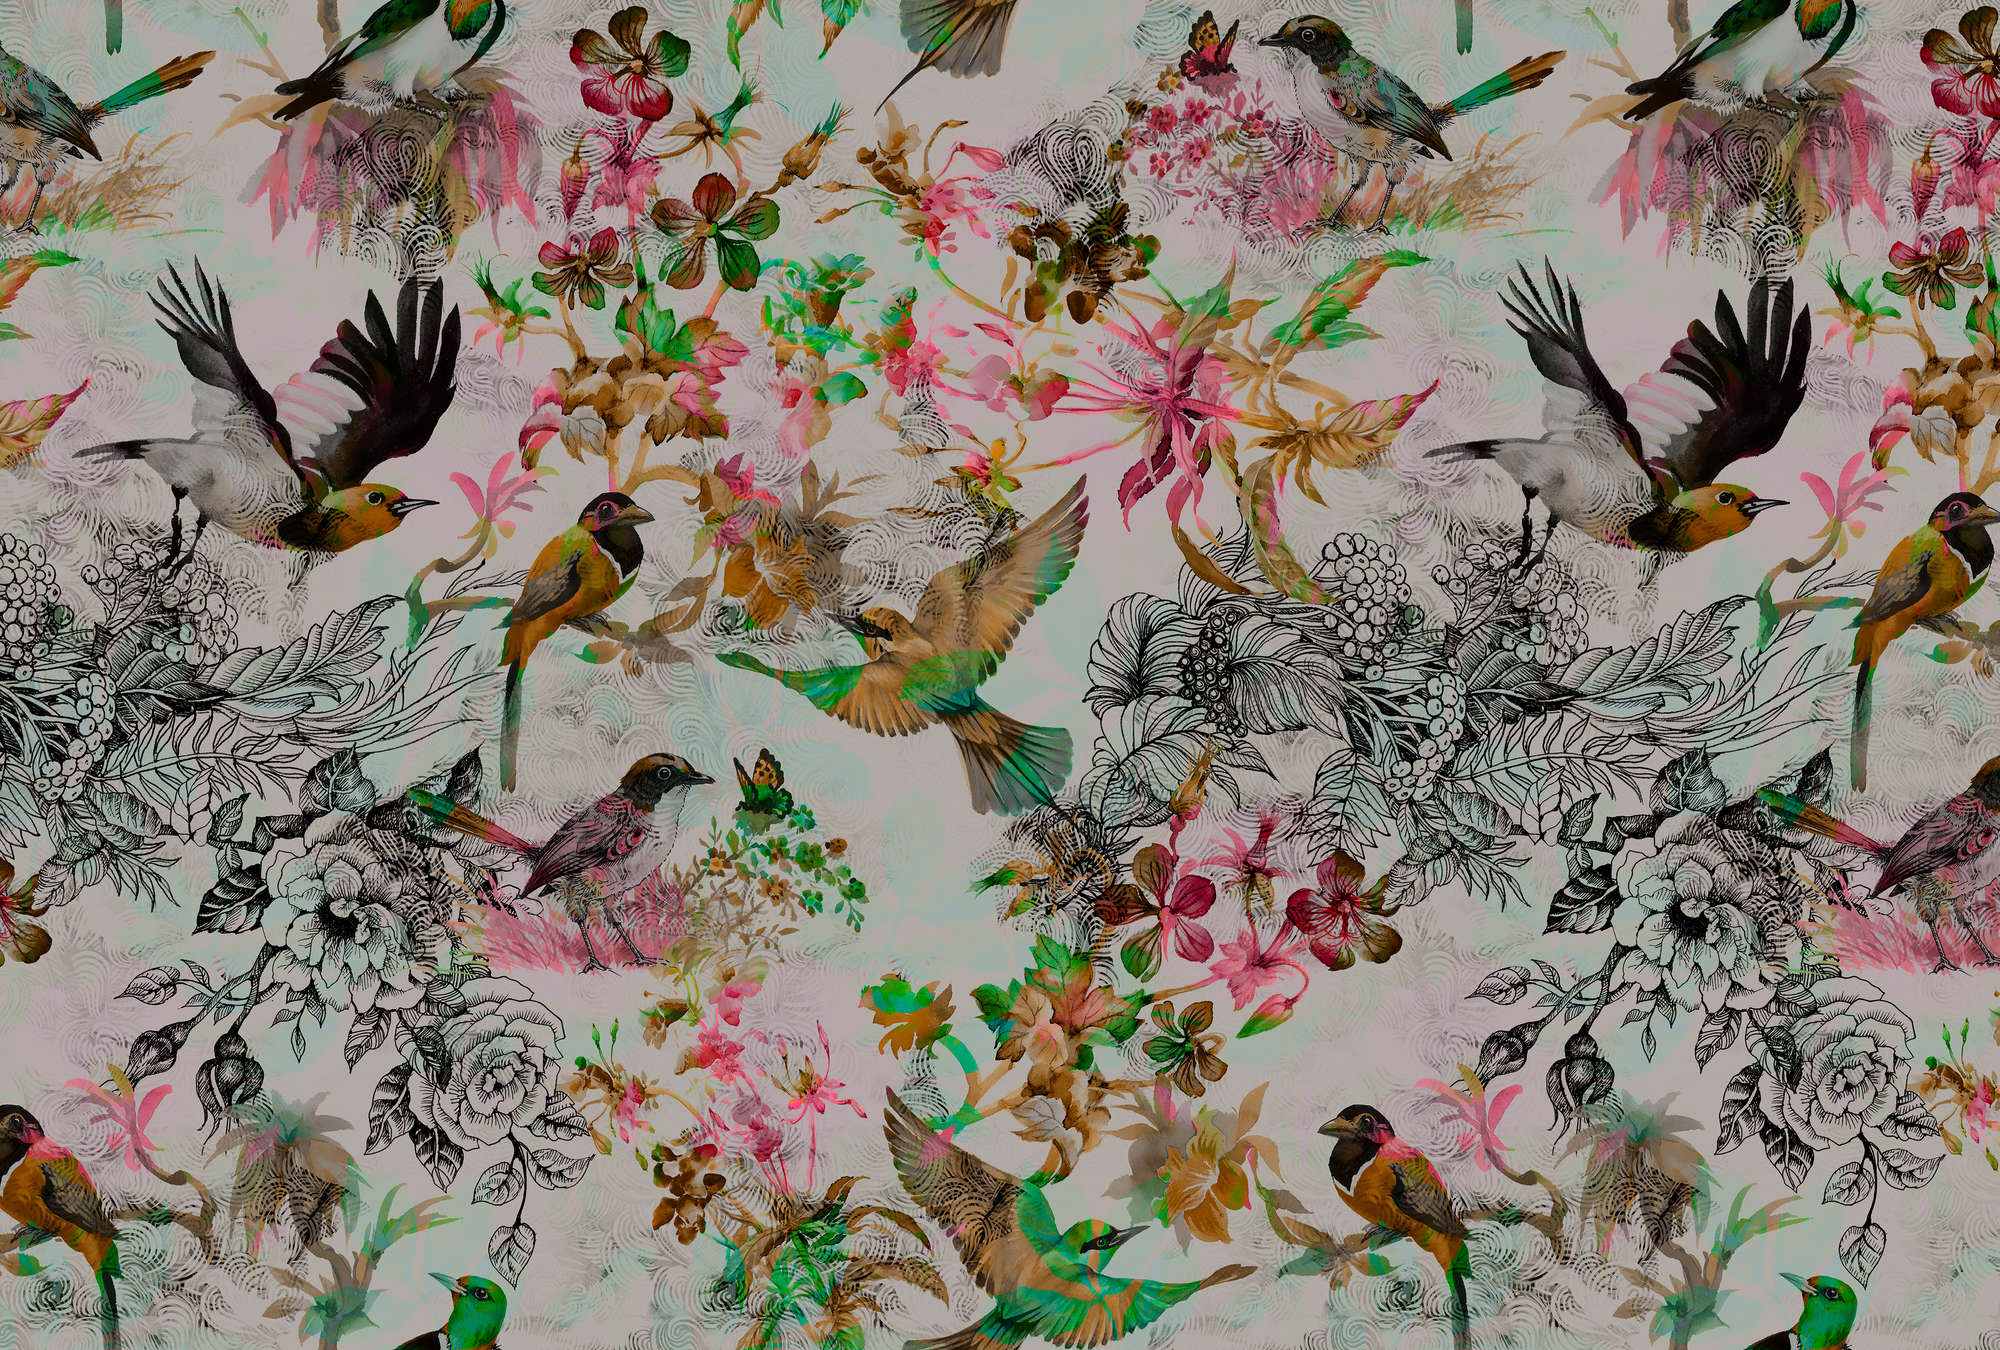             Carta da parati a collage Birds & Flowers - Grigio, rosa
        